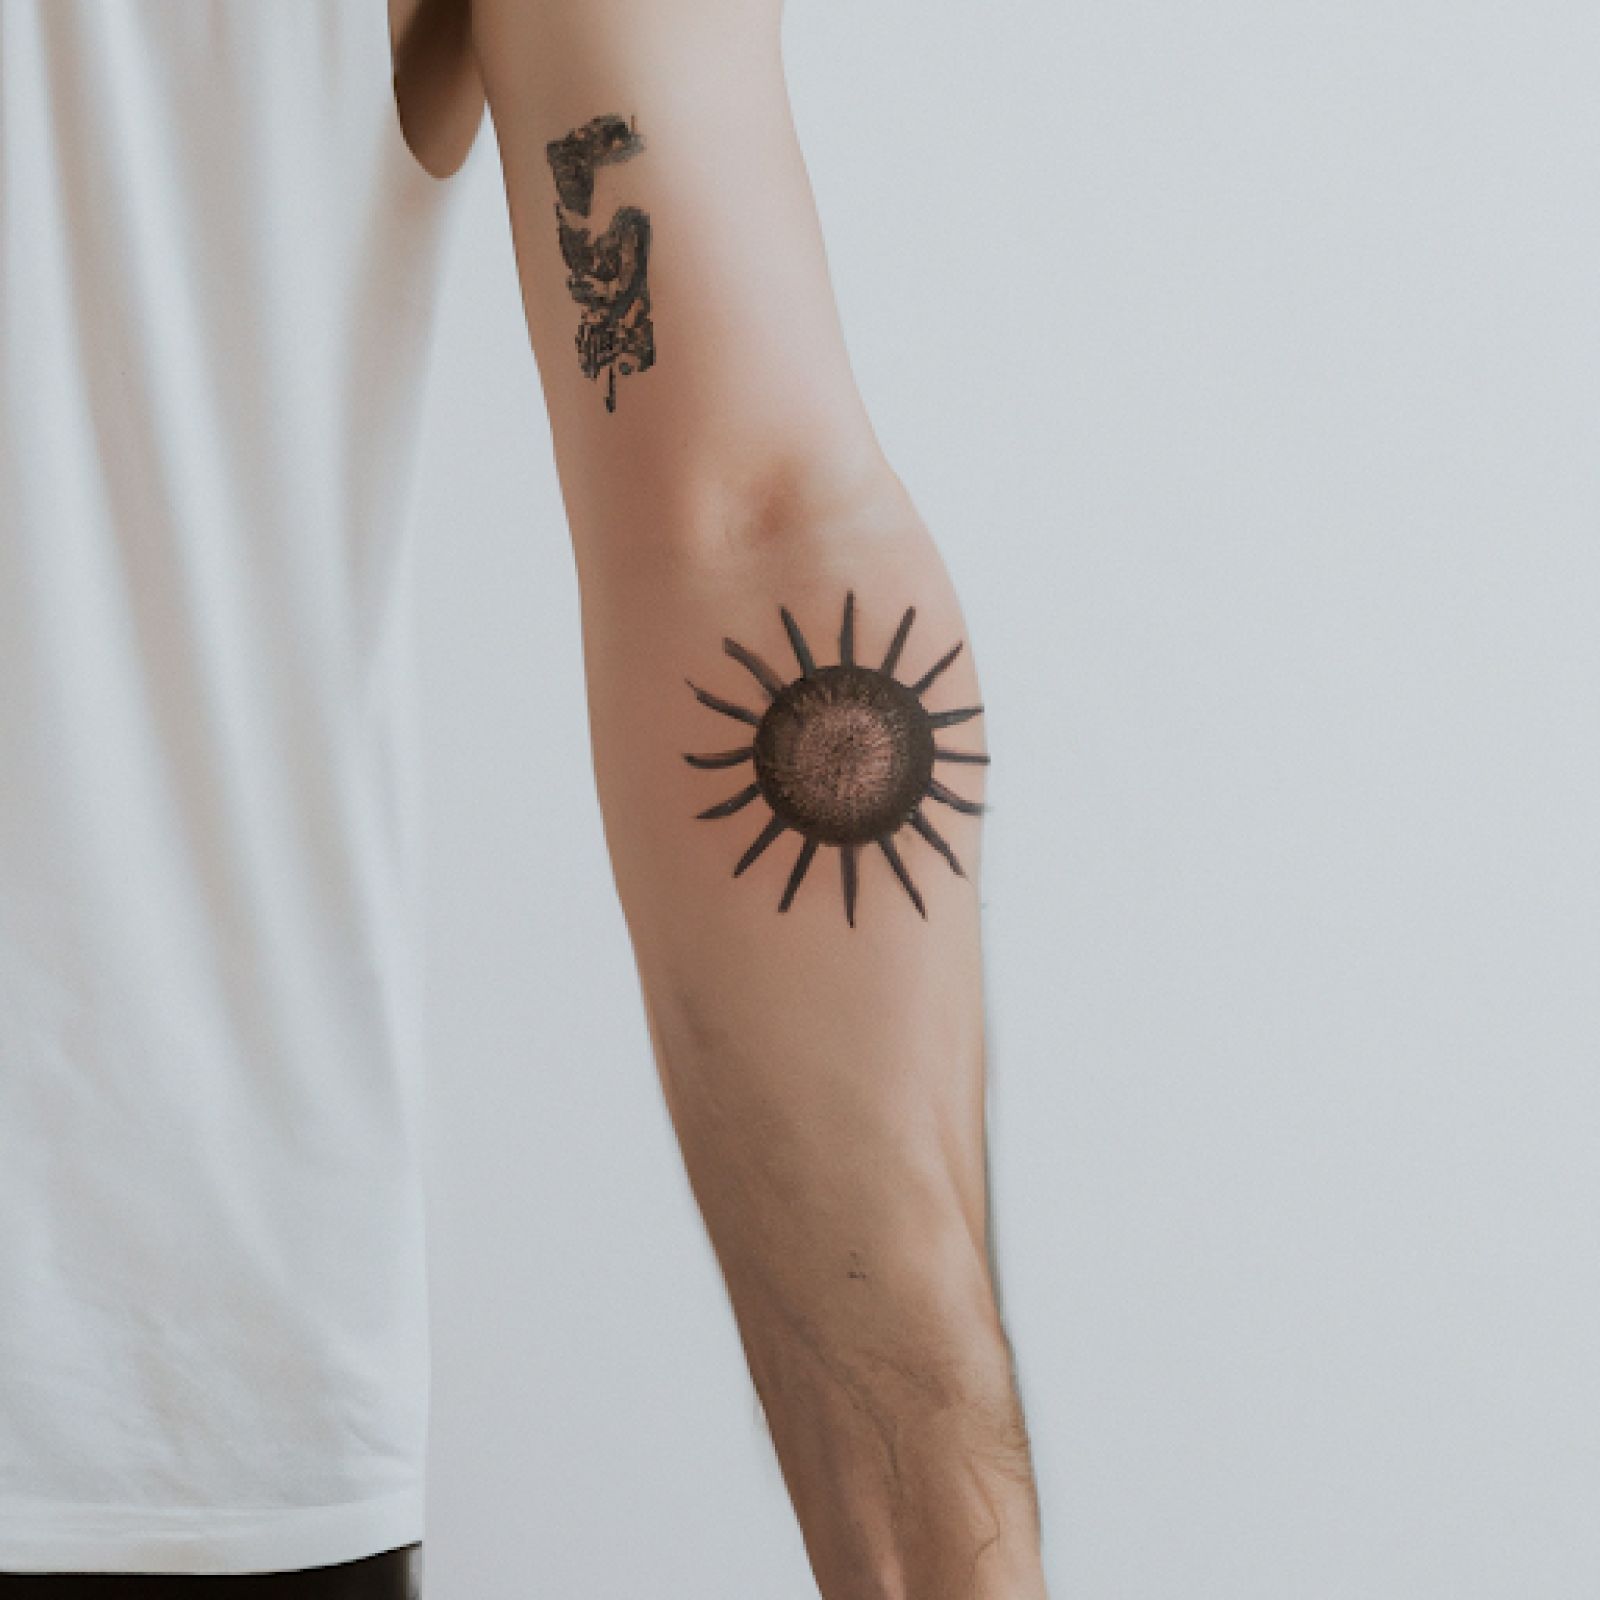 Sun tattoo on arm for men